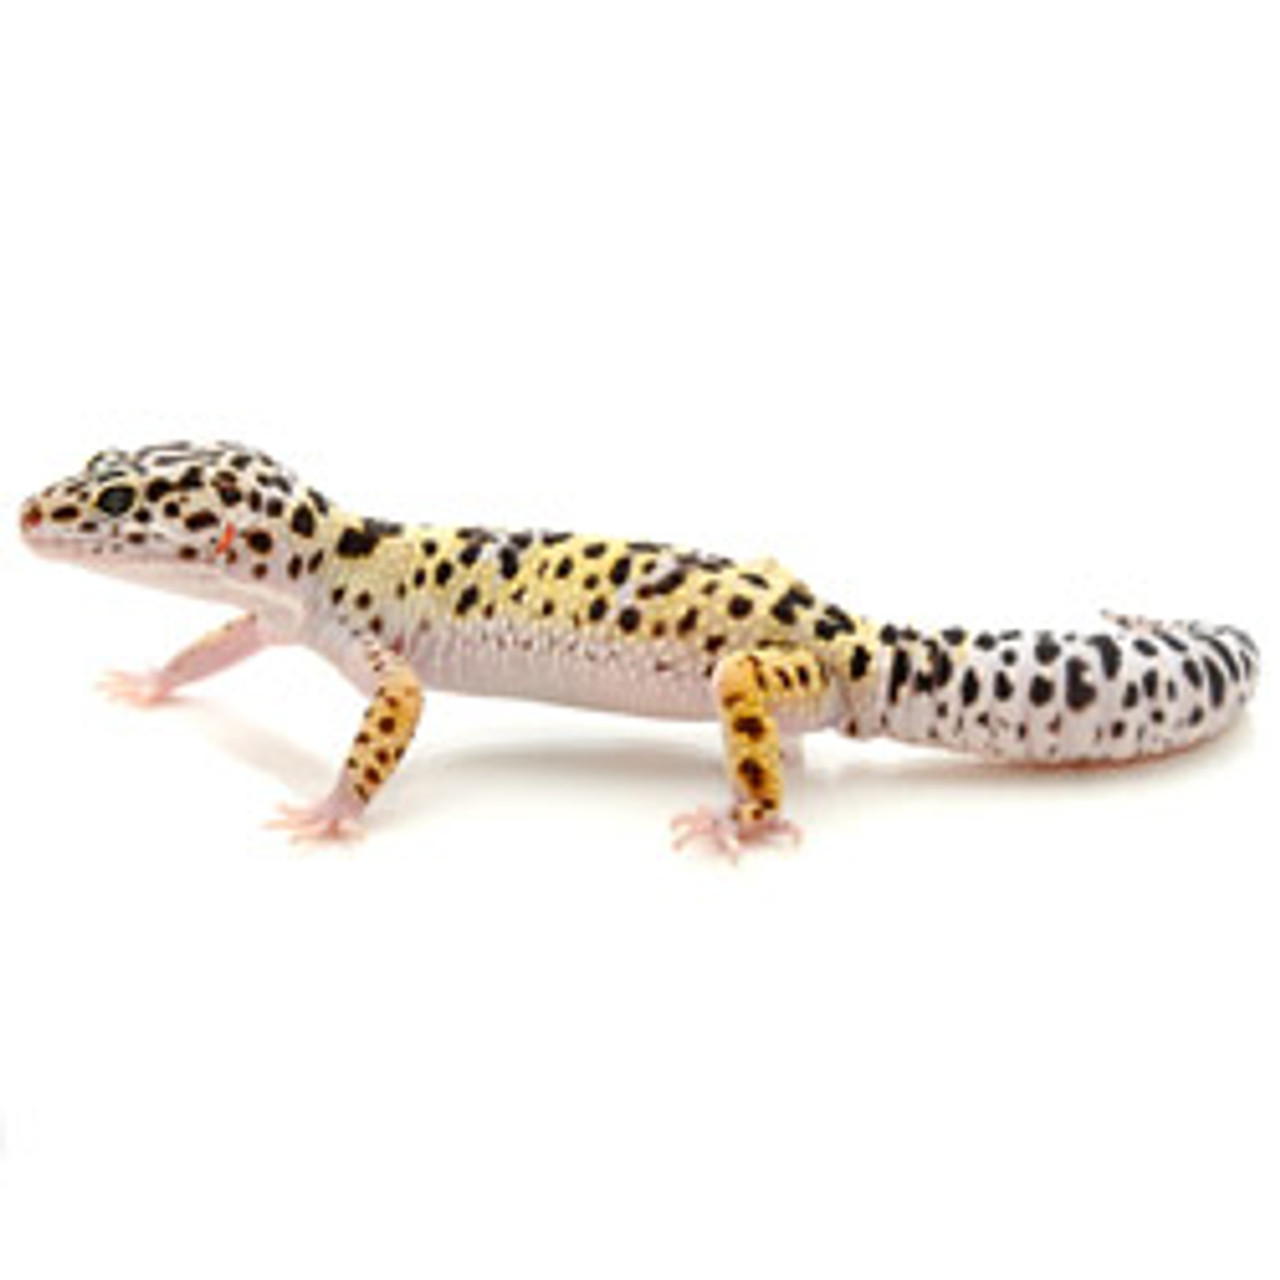 Leopard Gecko  (Eublepharis macularius) BABY